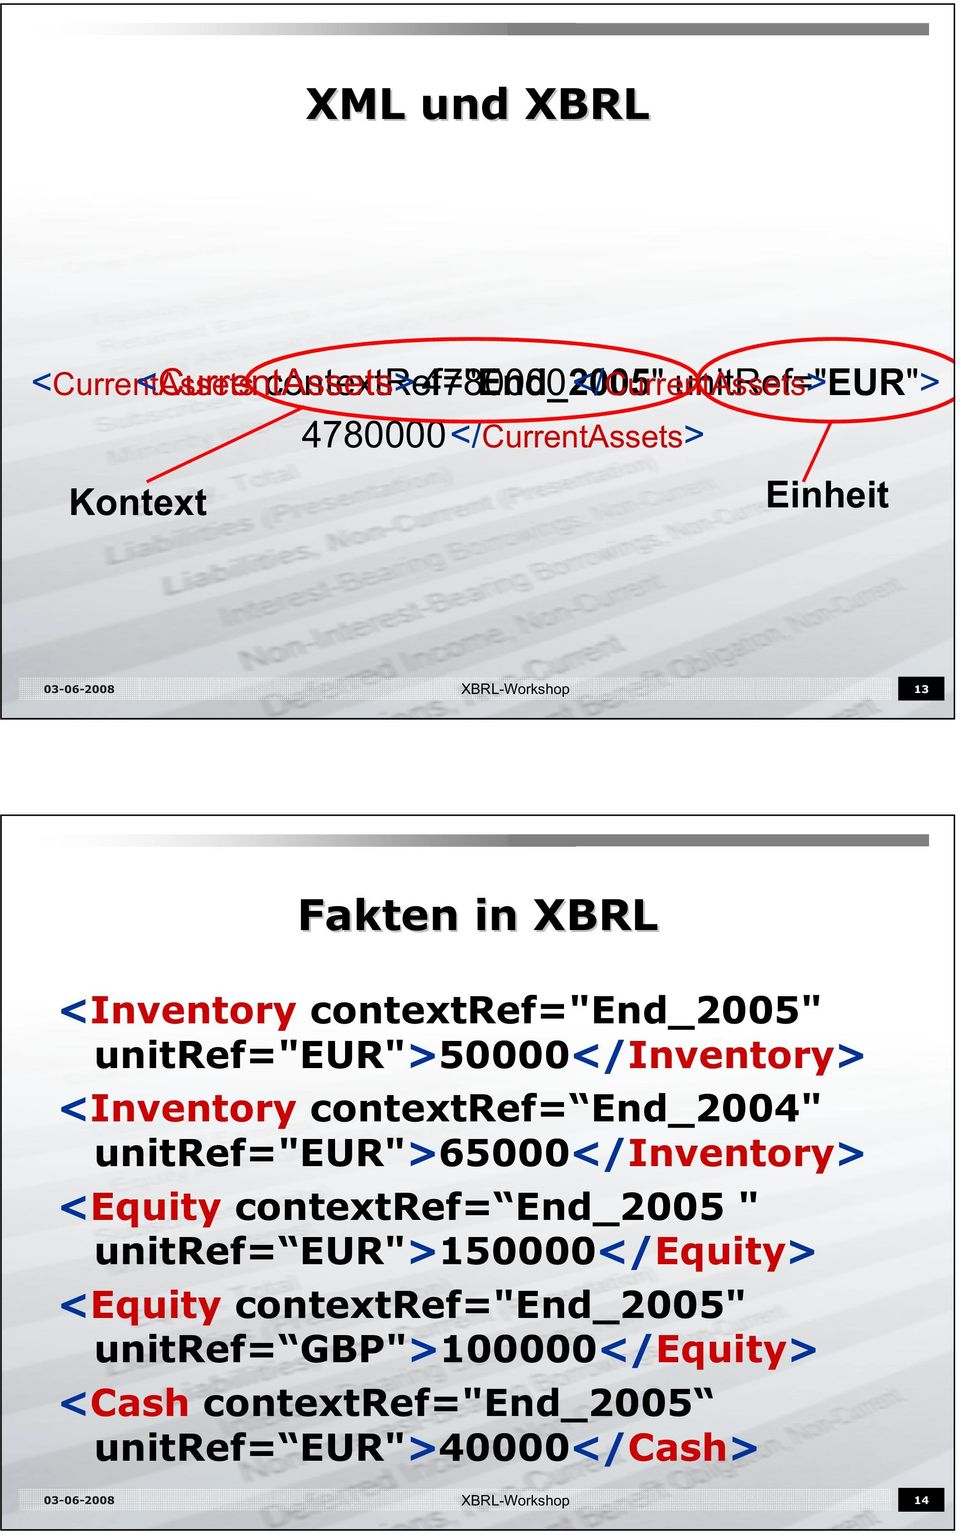 unitref="eur">50000</inventory> <Inventory contextref= End_2004" unitref="eur">65000</inventory> <Equity contextref=